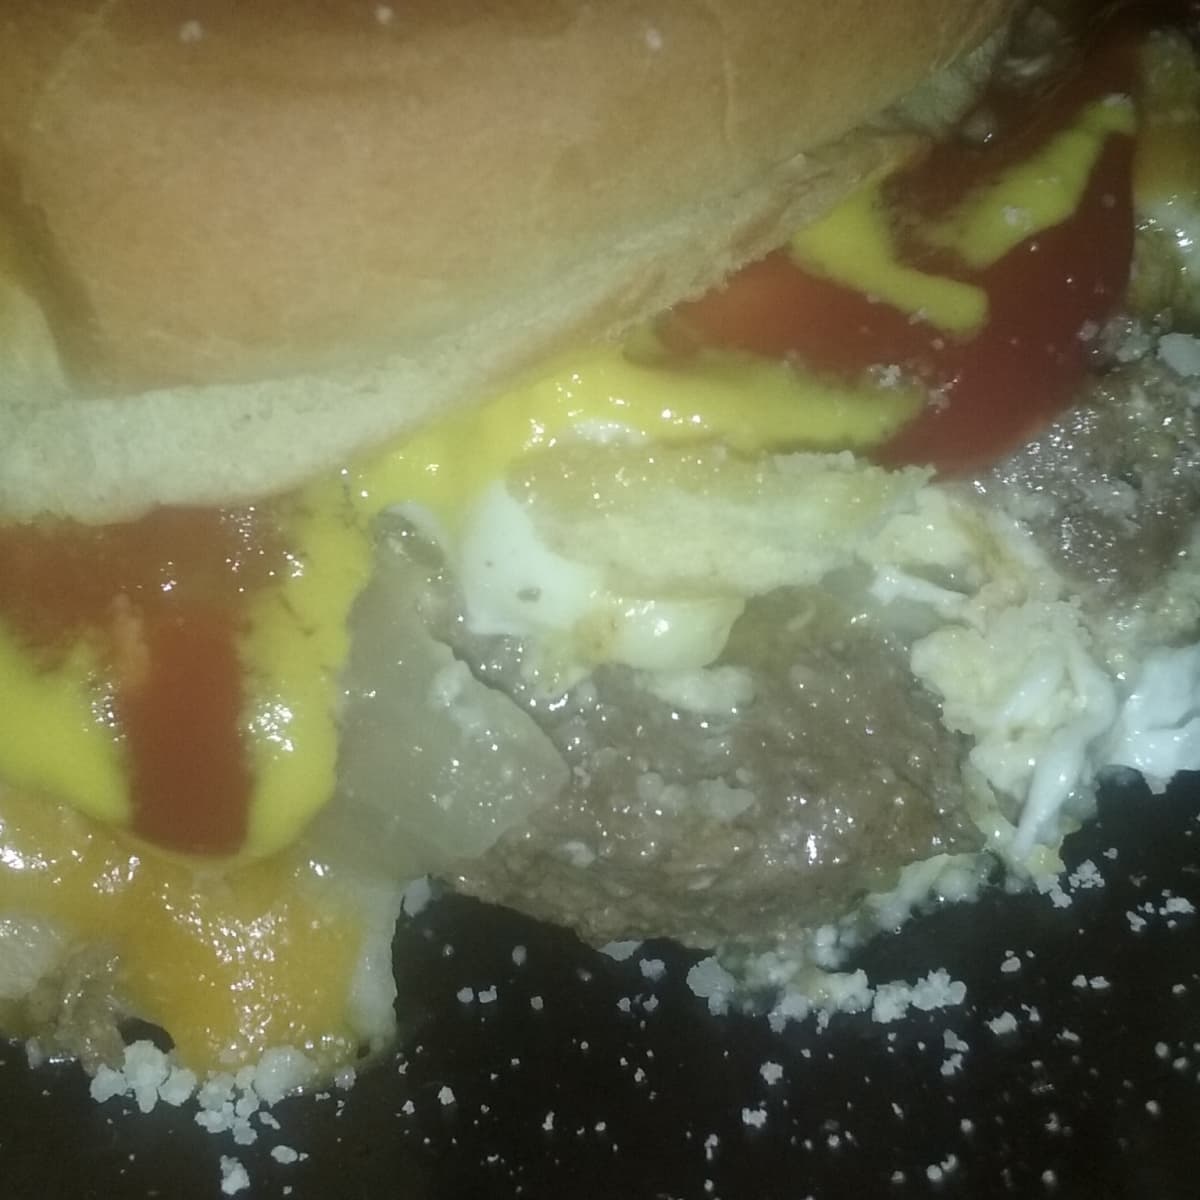 https://images.saymedia-content.com/.image/ar_1:1%2Cc_fill%2Ccs_srgb%2Cfl_progressive%2Cq_auto:eco%2Cw_1200/MTg4NDY2OTgxMjk1Njk1NDc2/quick-easy-recipe-for-delicious-bubba-burgers-with-fried-egg-onions-cheese.jpg